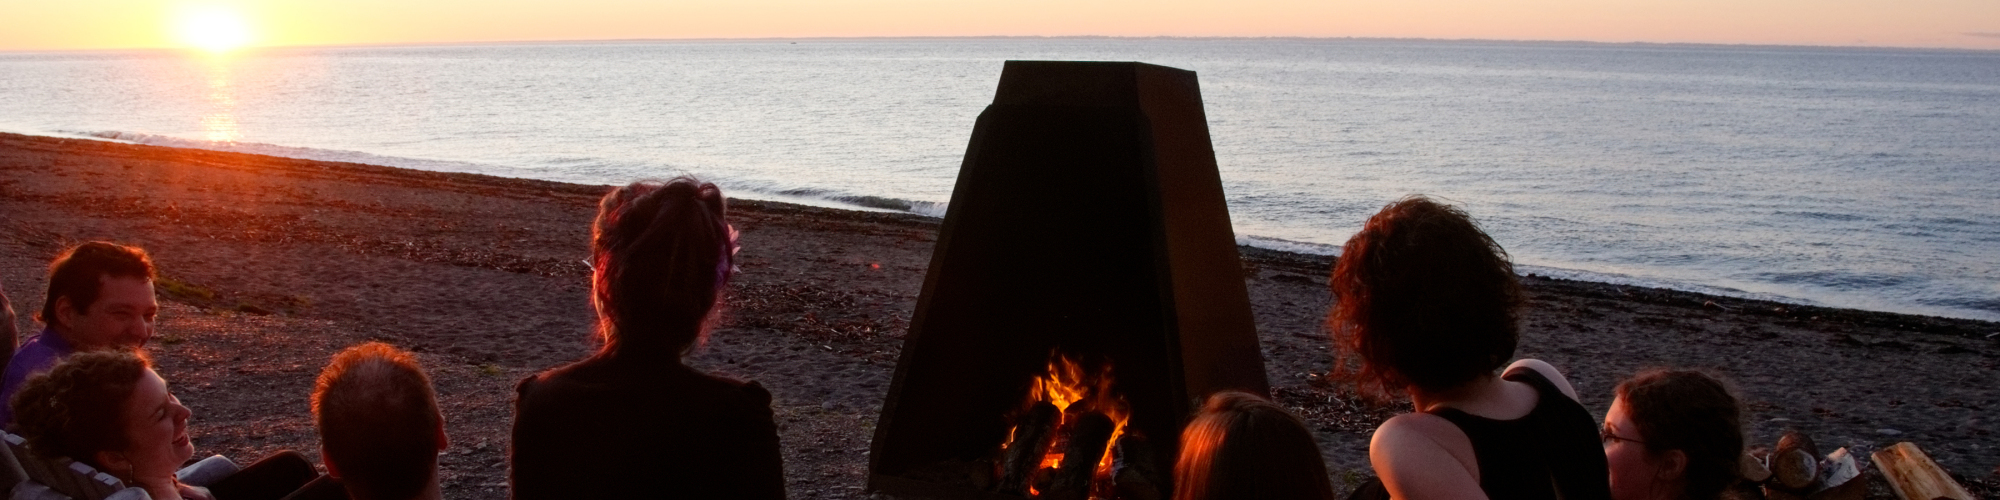 People around a bonfire, sunset